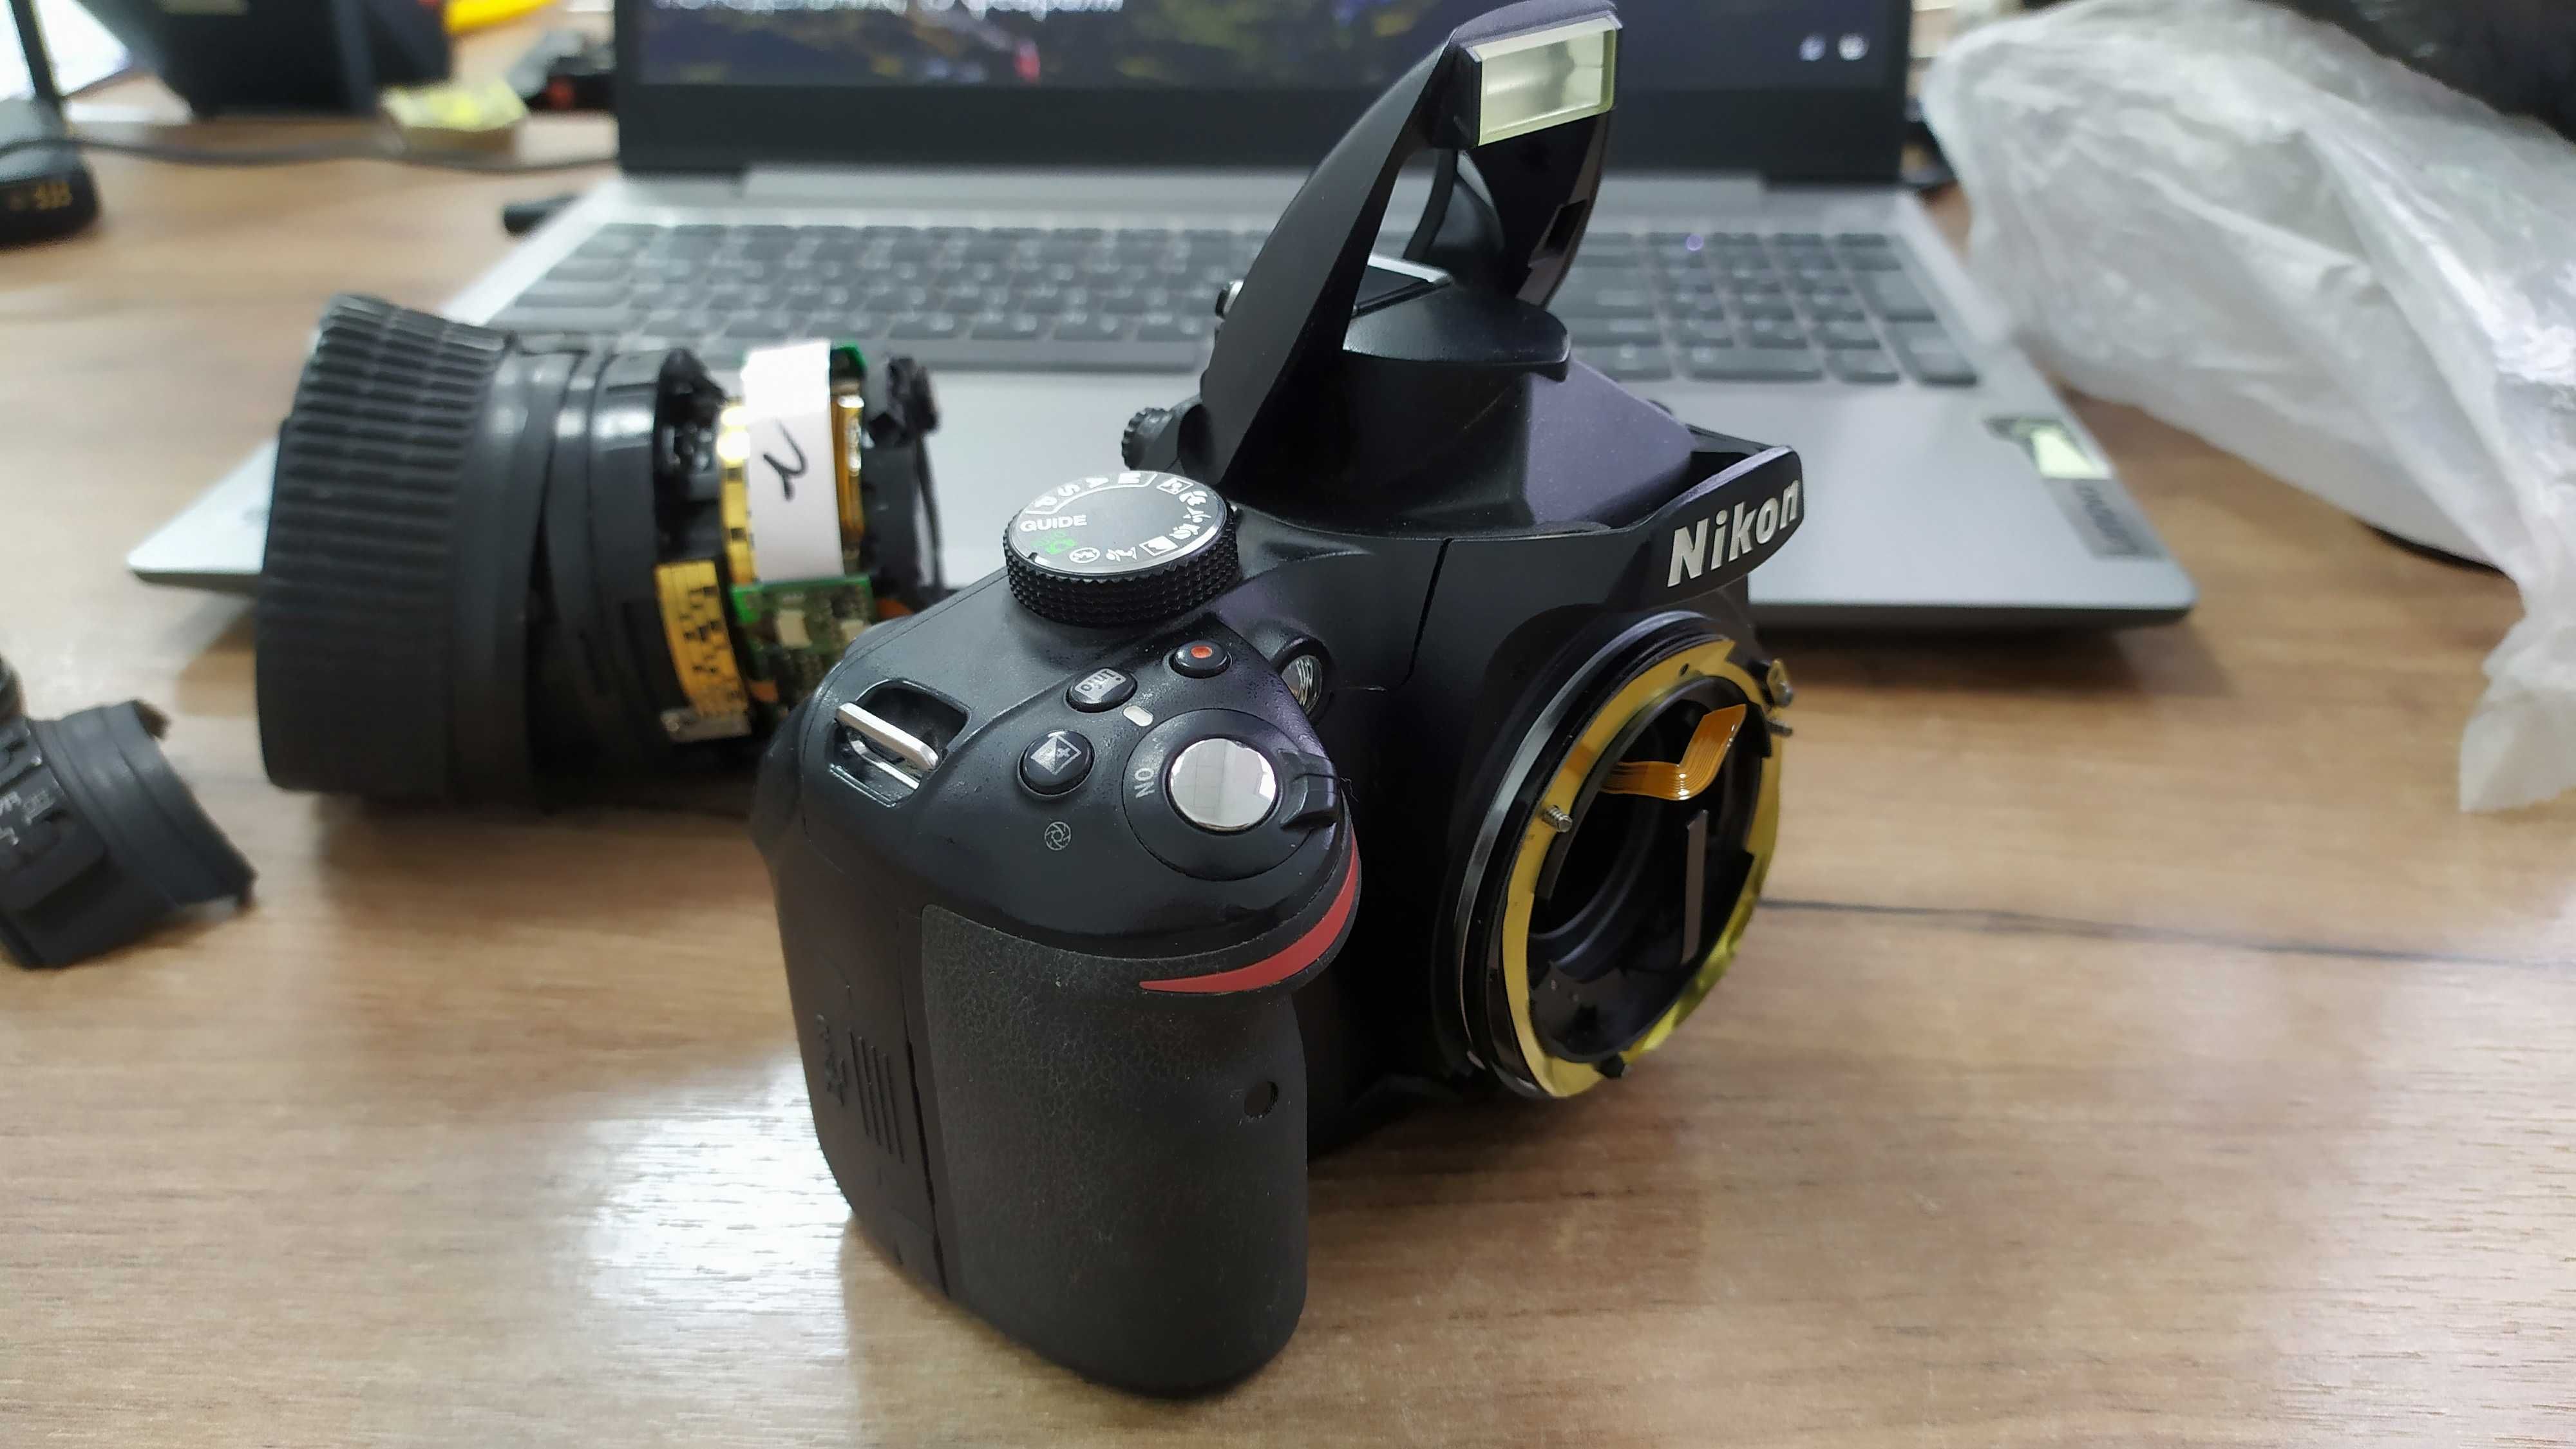 Fotoaparat Nikon D3200 zapchast.